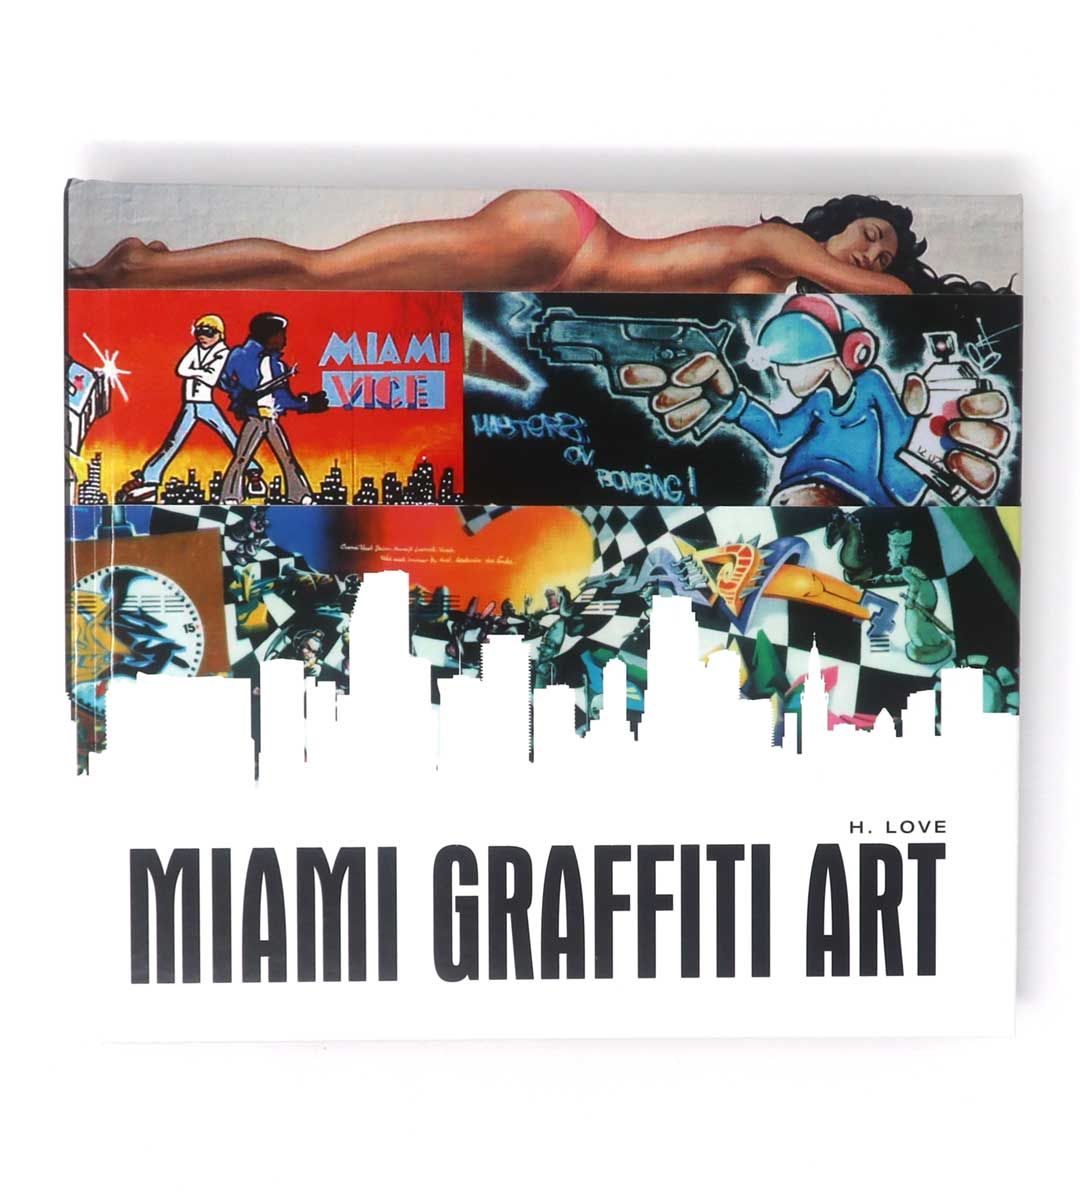 Arte de graffiti de Miami